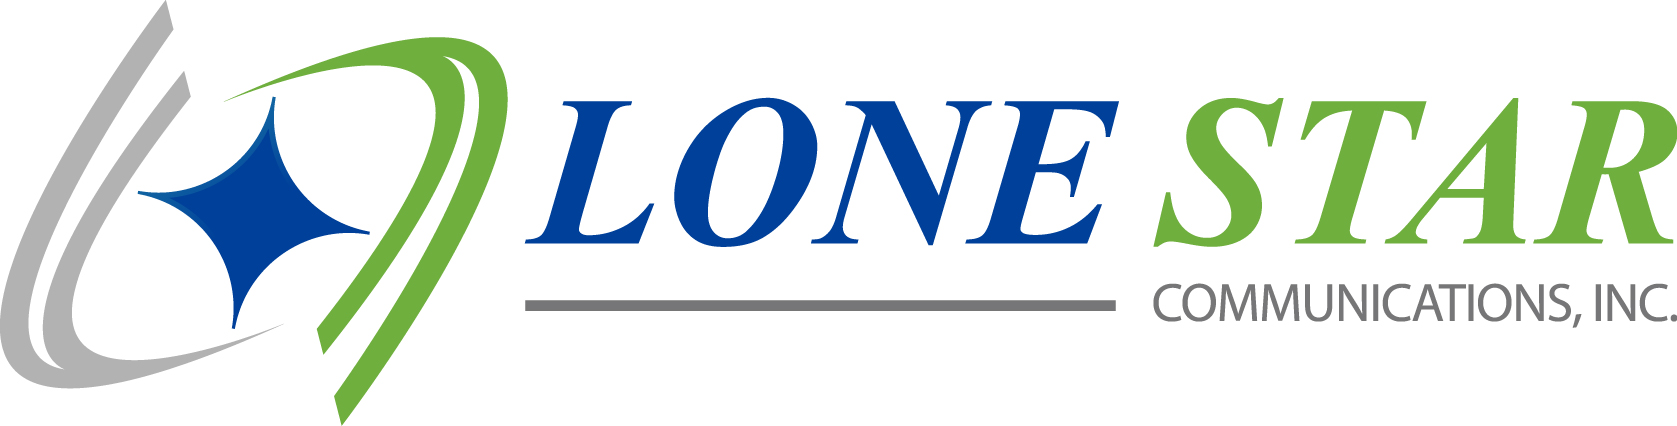 Lone Star Communications, Inc. logo